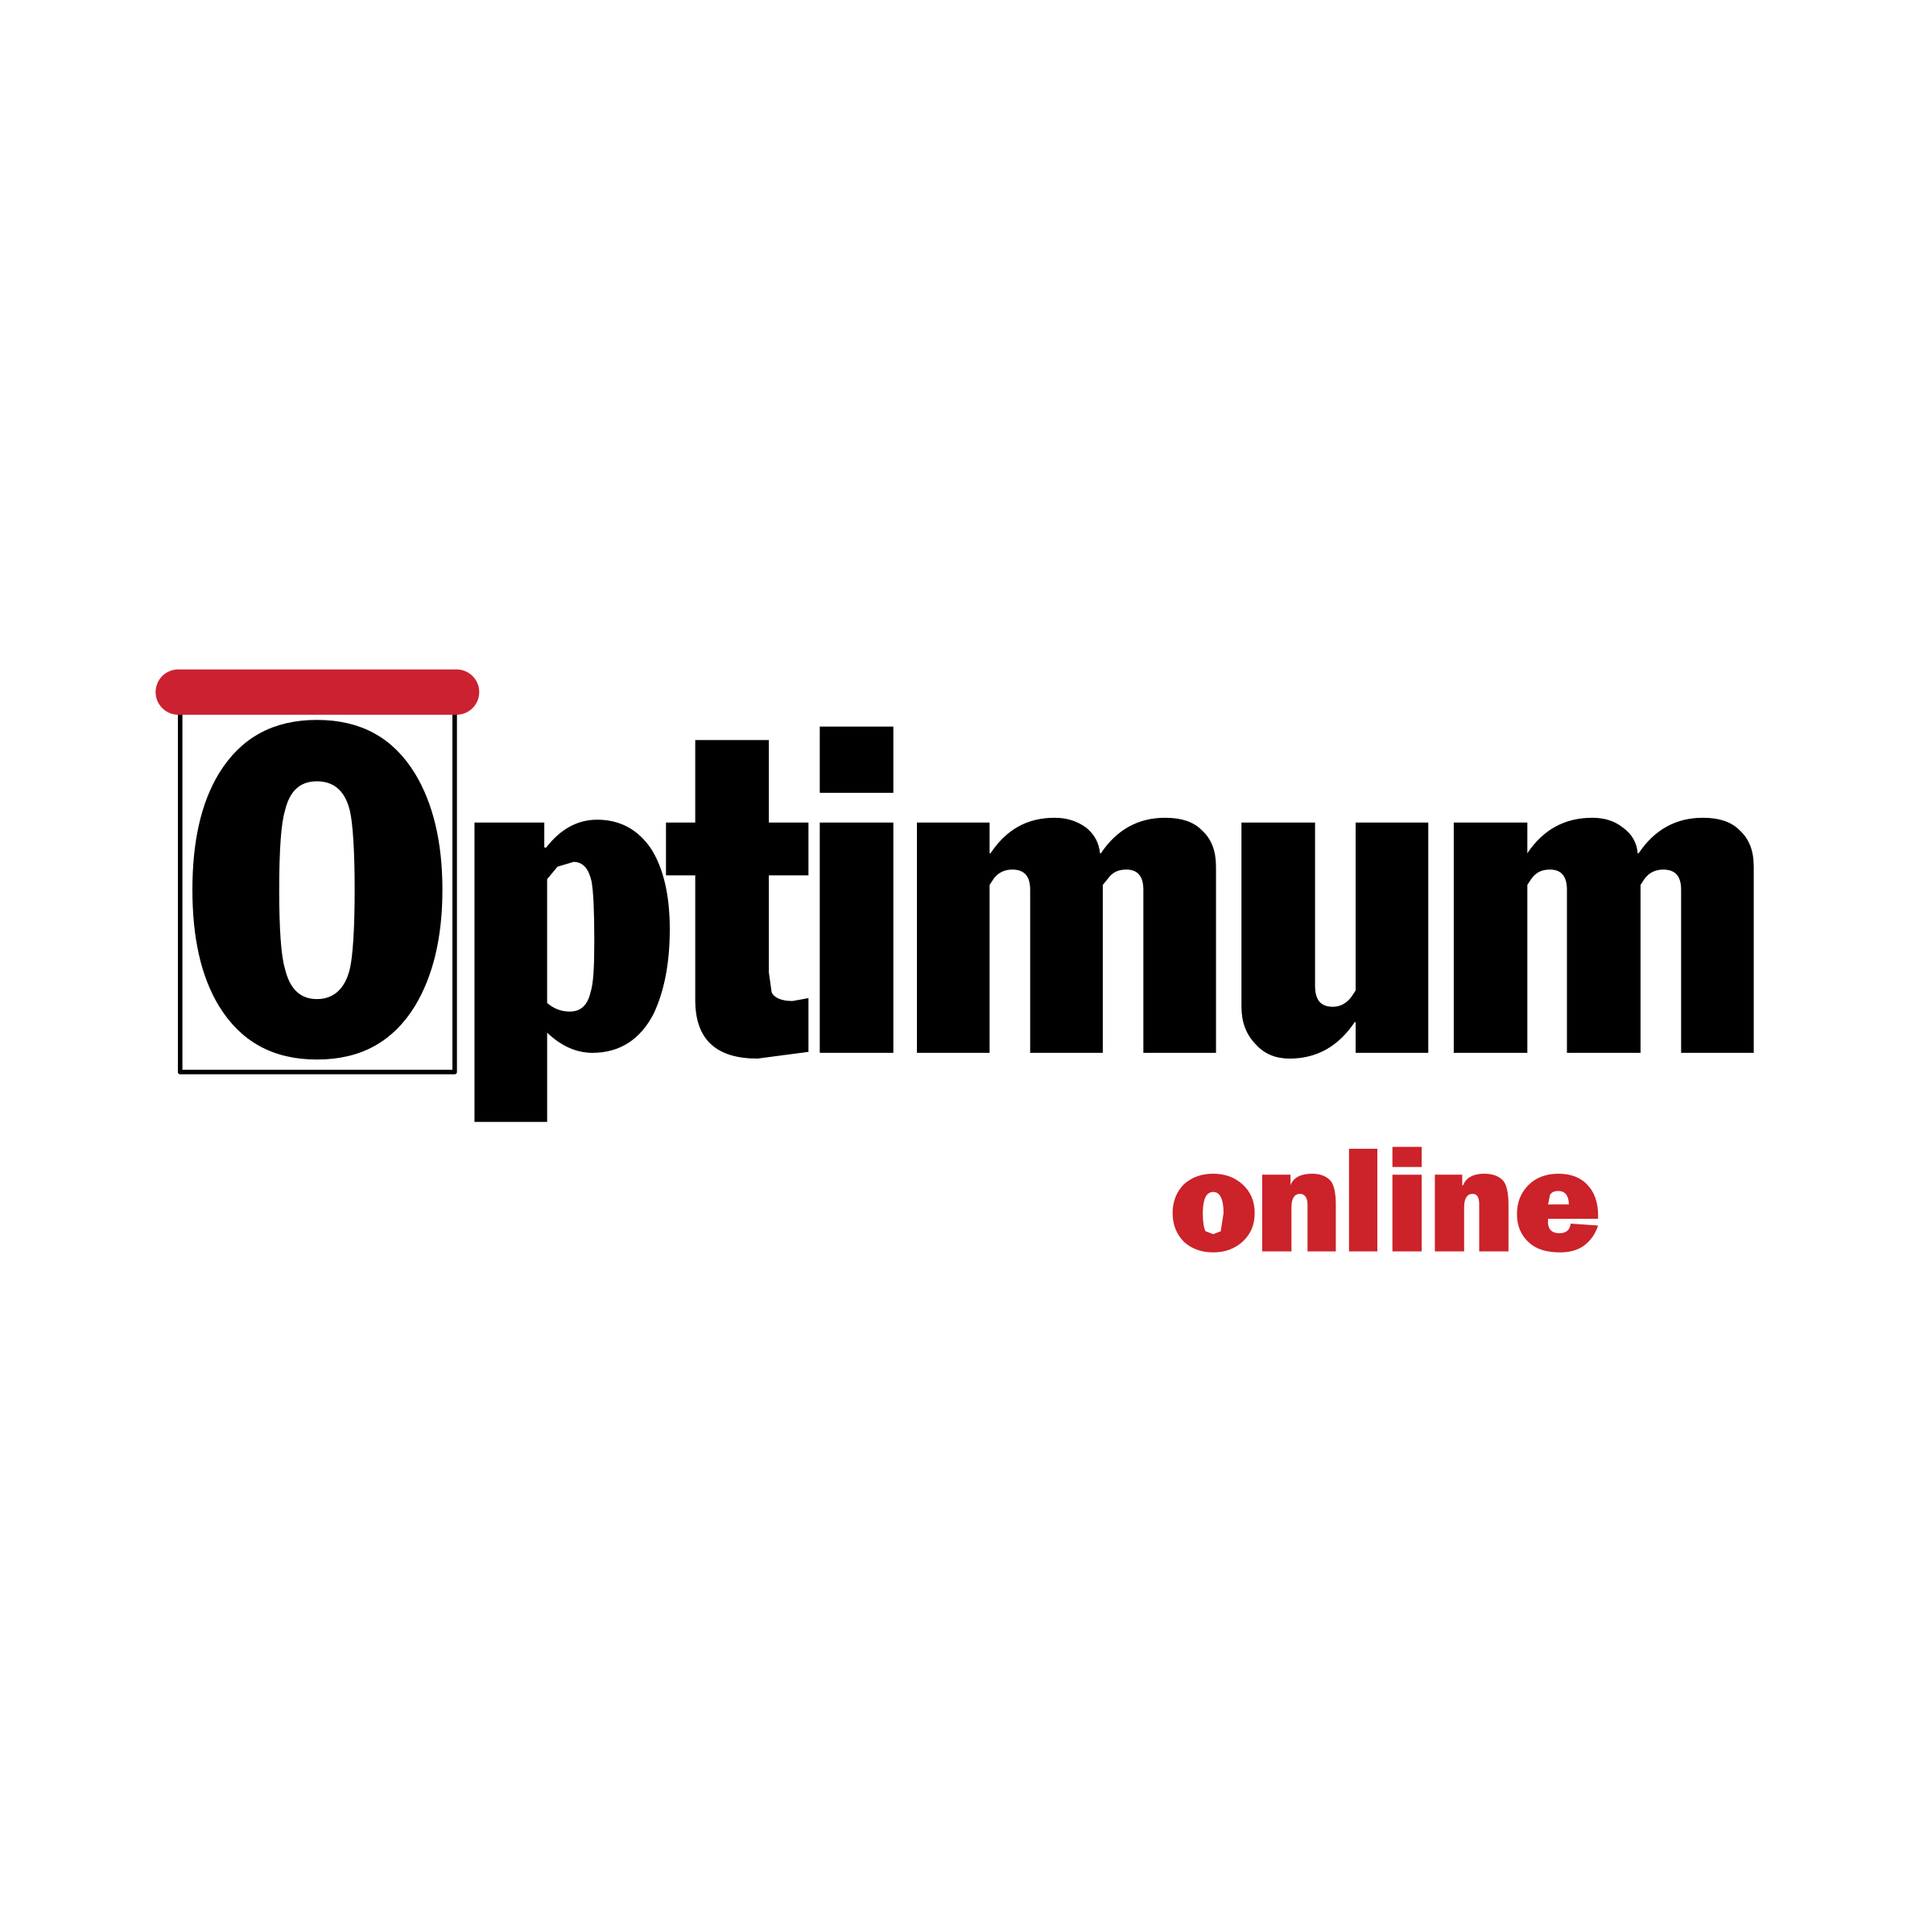 Optimum Logo - Optimum Logo PNG Transparent & SVG Vector - Freebie Supply